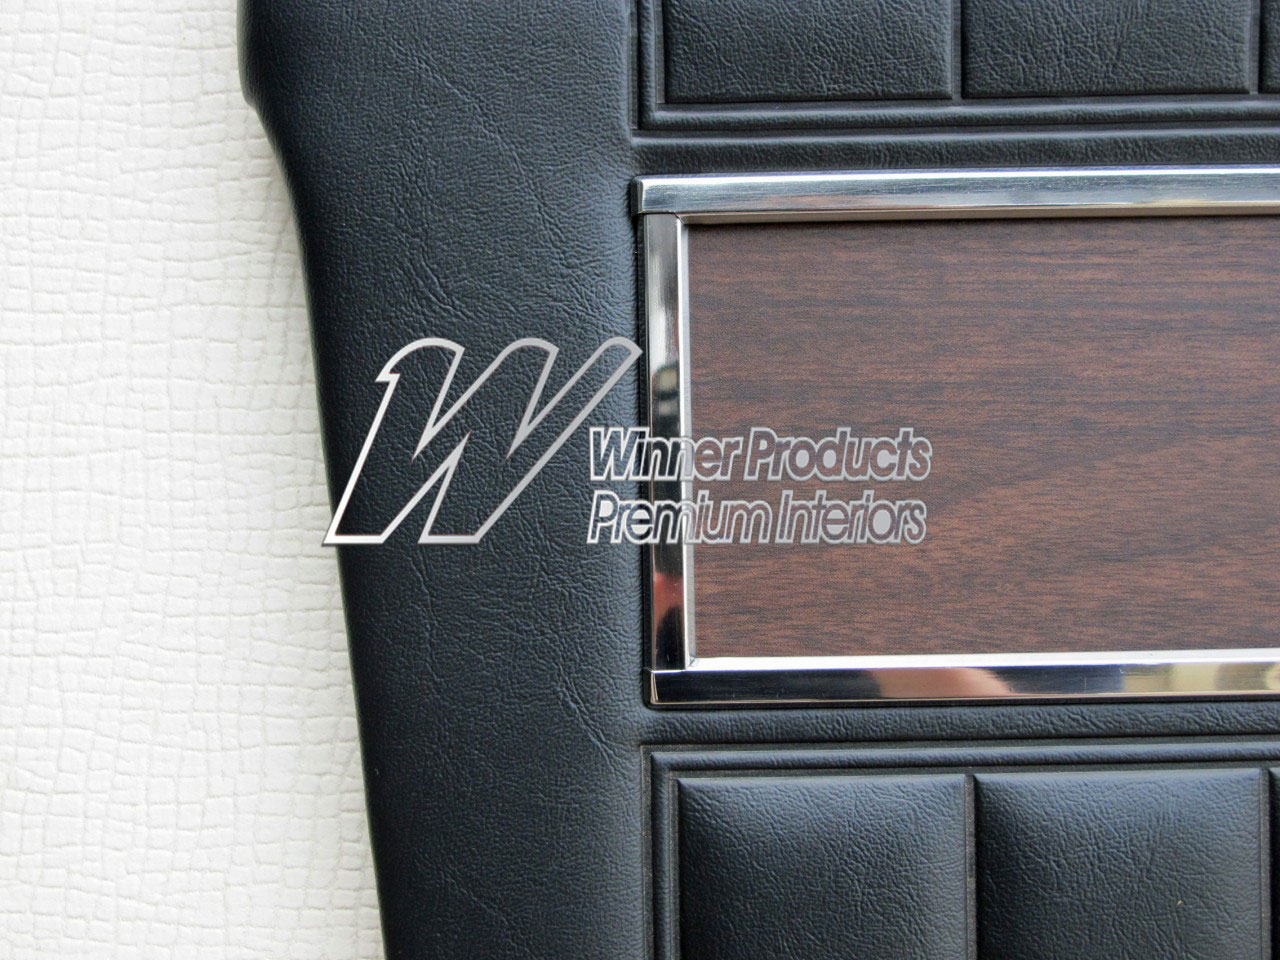 Holden Premier HK Premier Wagon 10S Black & Castillion Weave Door Trims (Image 2 of 2)